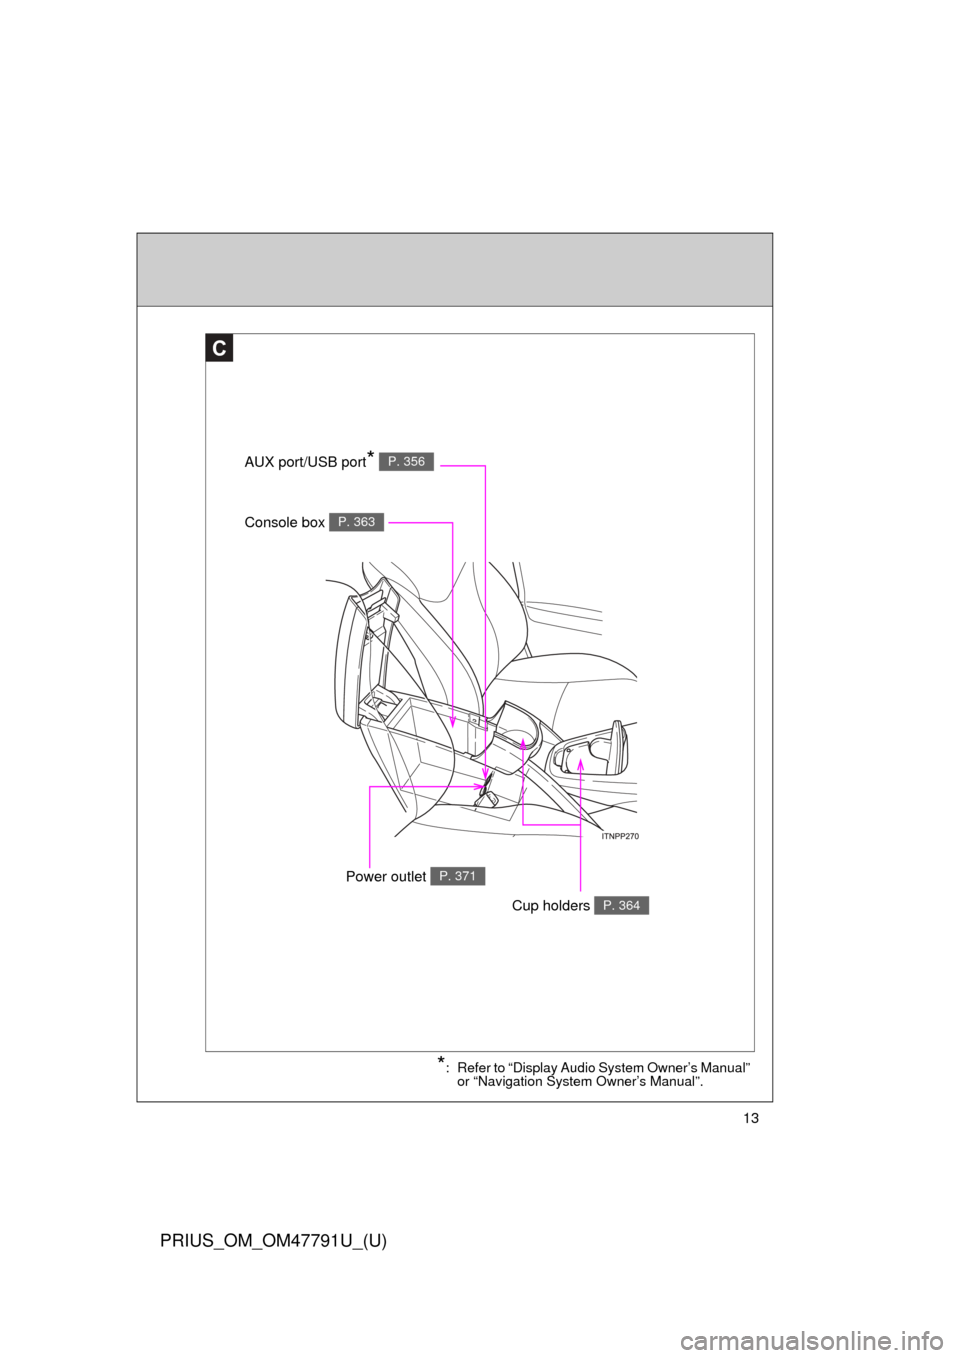 TOYOTA PRIUS 2013 3.G User Guide 13
PRIUS_OM_OM47791U_(U)
C
Console box P. 363
*: Refer to “Display Audio System Owner’s Manual” or “Navigation System Owner’s Manual”.
Cup holders P. 364
AUX port/USB port* P. 356
Power ou